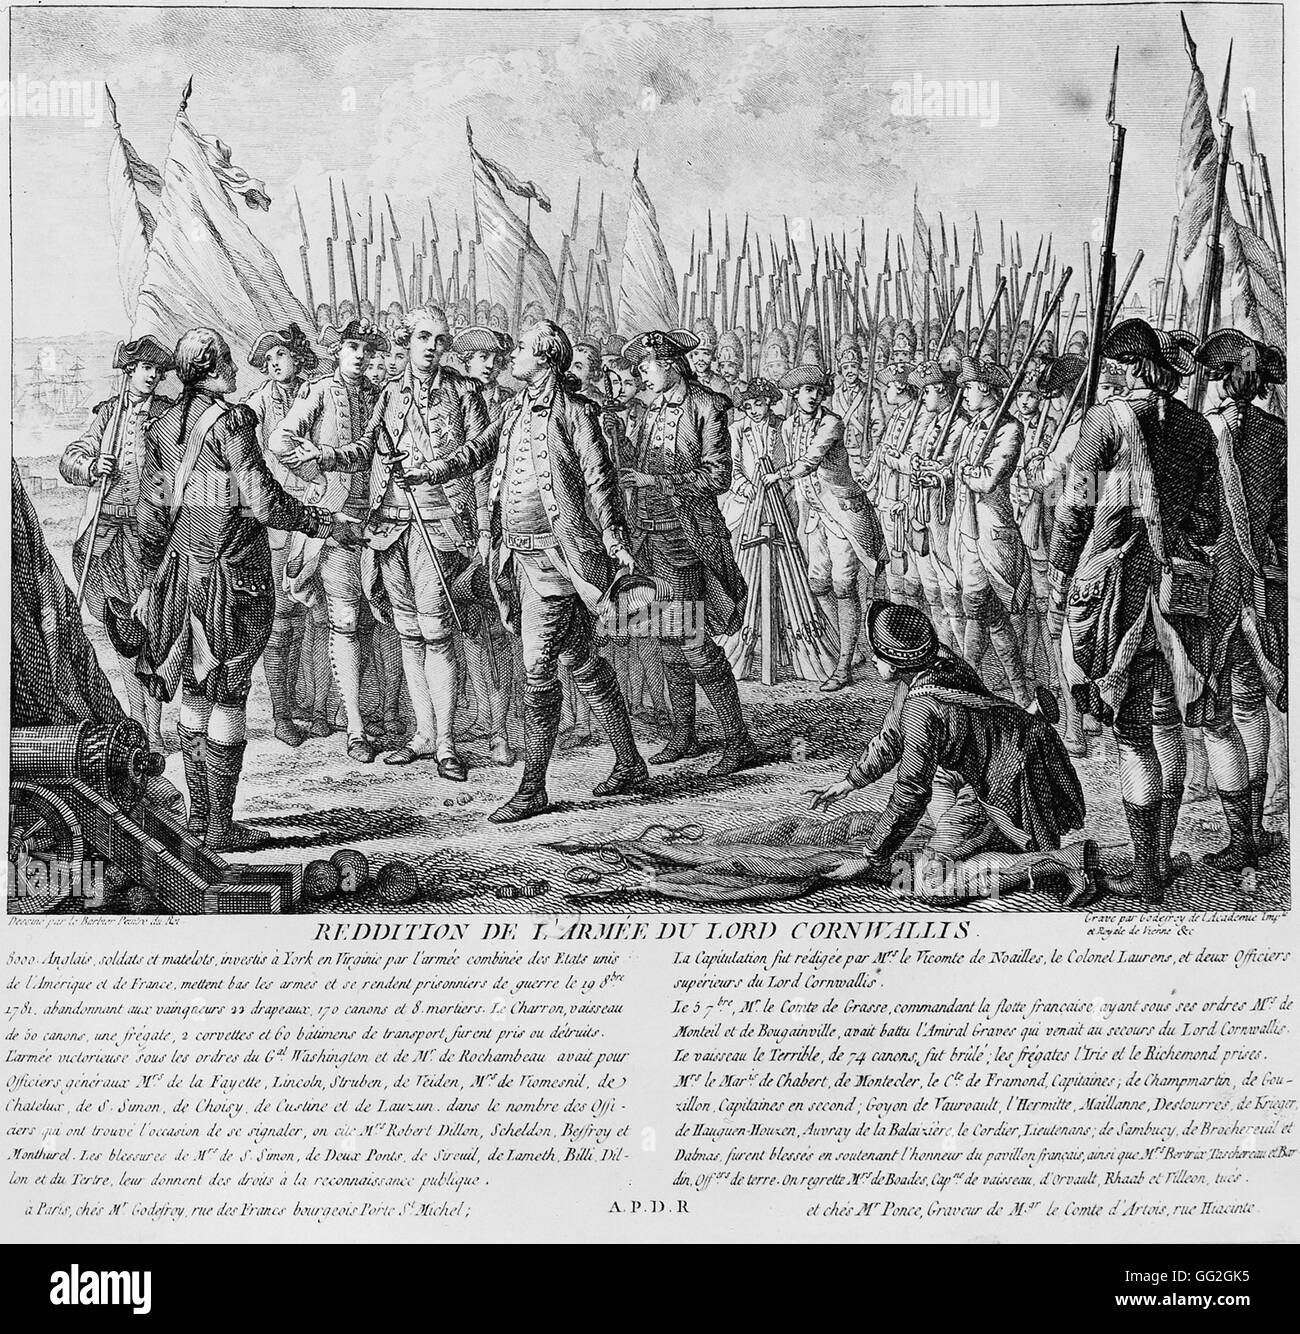 Surrender of Lord Cornwallis' army at the Battle of Yorktown, 1781 Paris, Bibliothèque Nationale de France Stock Photo